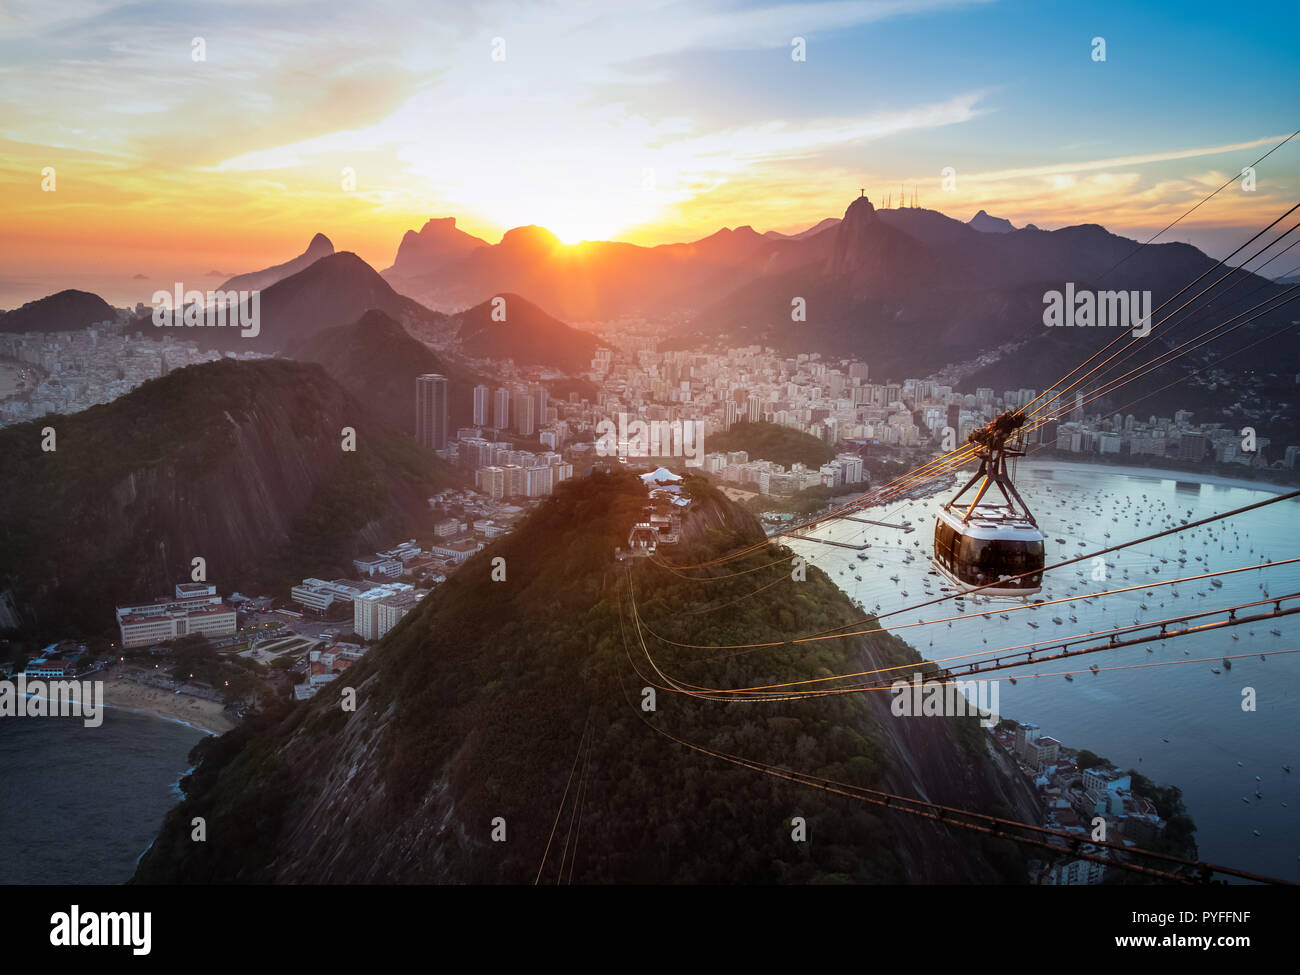 Aerial view of Rio de Janeiro at sunset with Urca and Sugar Loaf Cable Car and Corcovado mountain  - Rio de Janeiro, Brazil Stock Photo